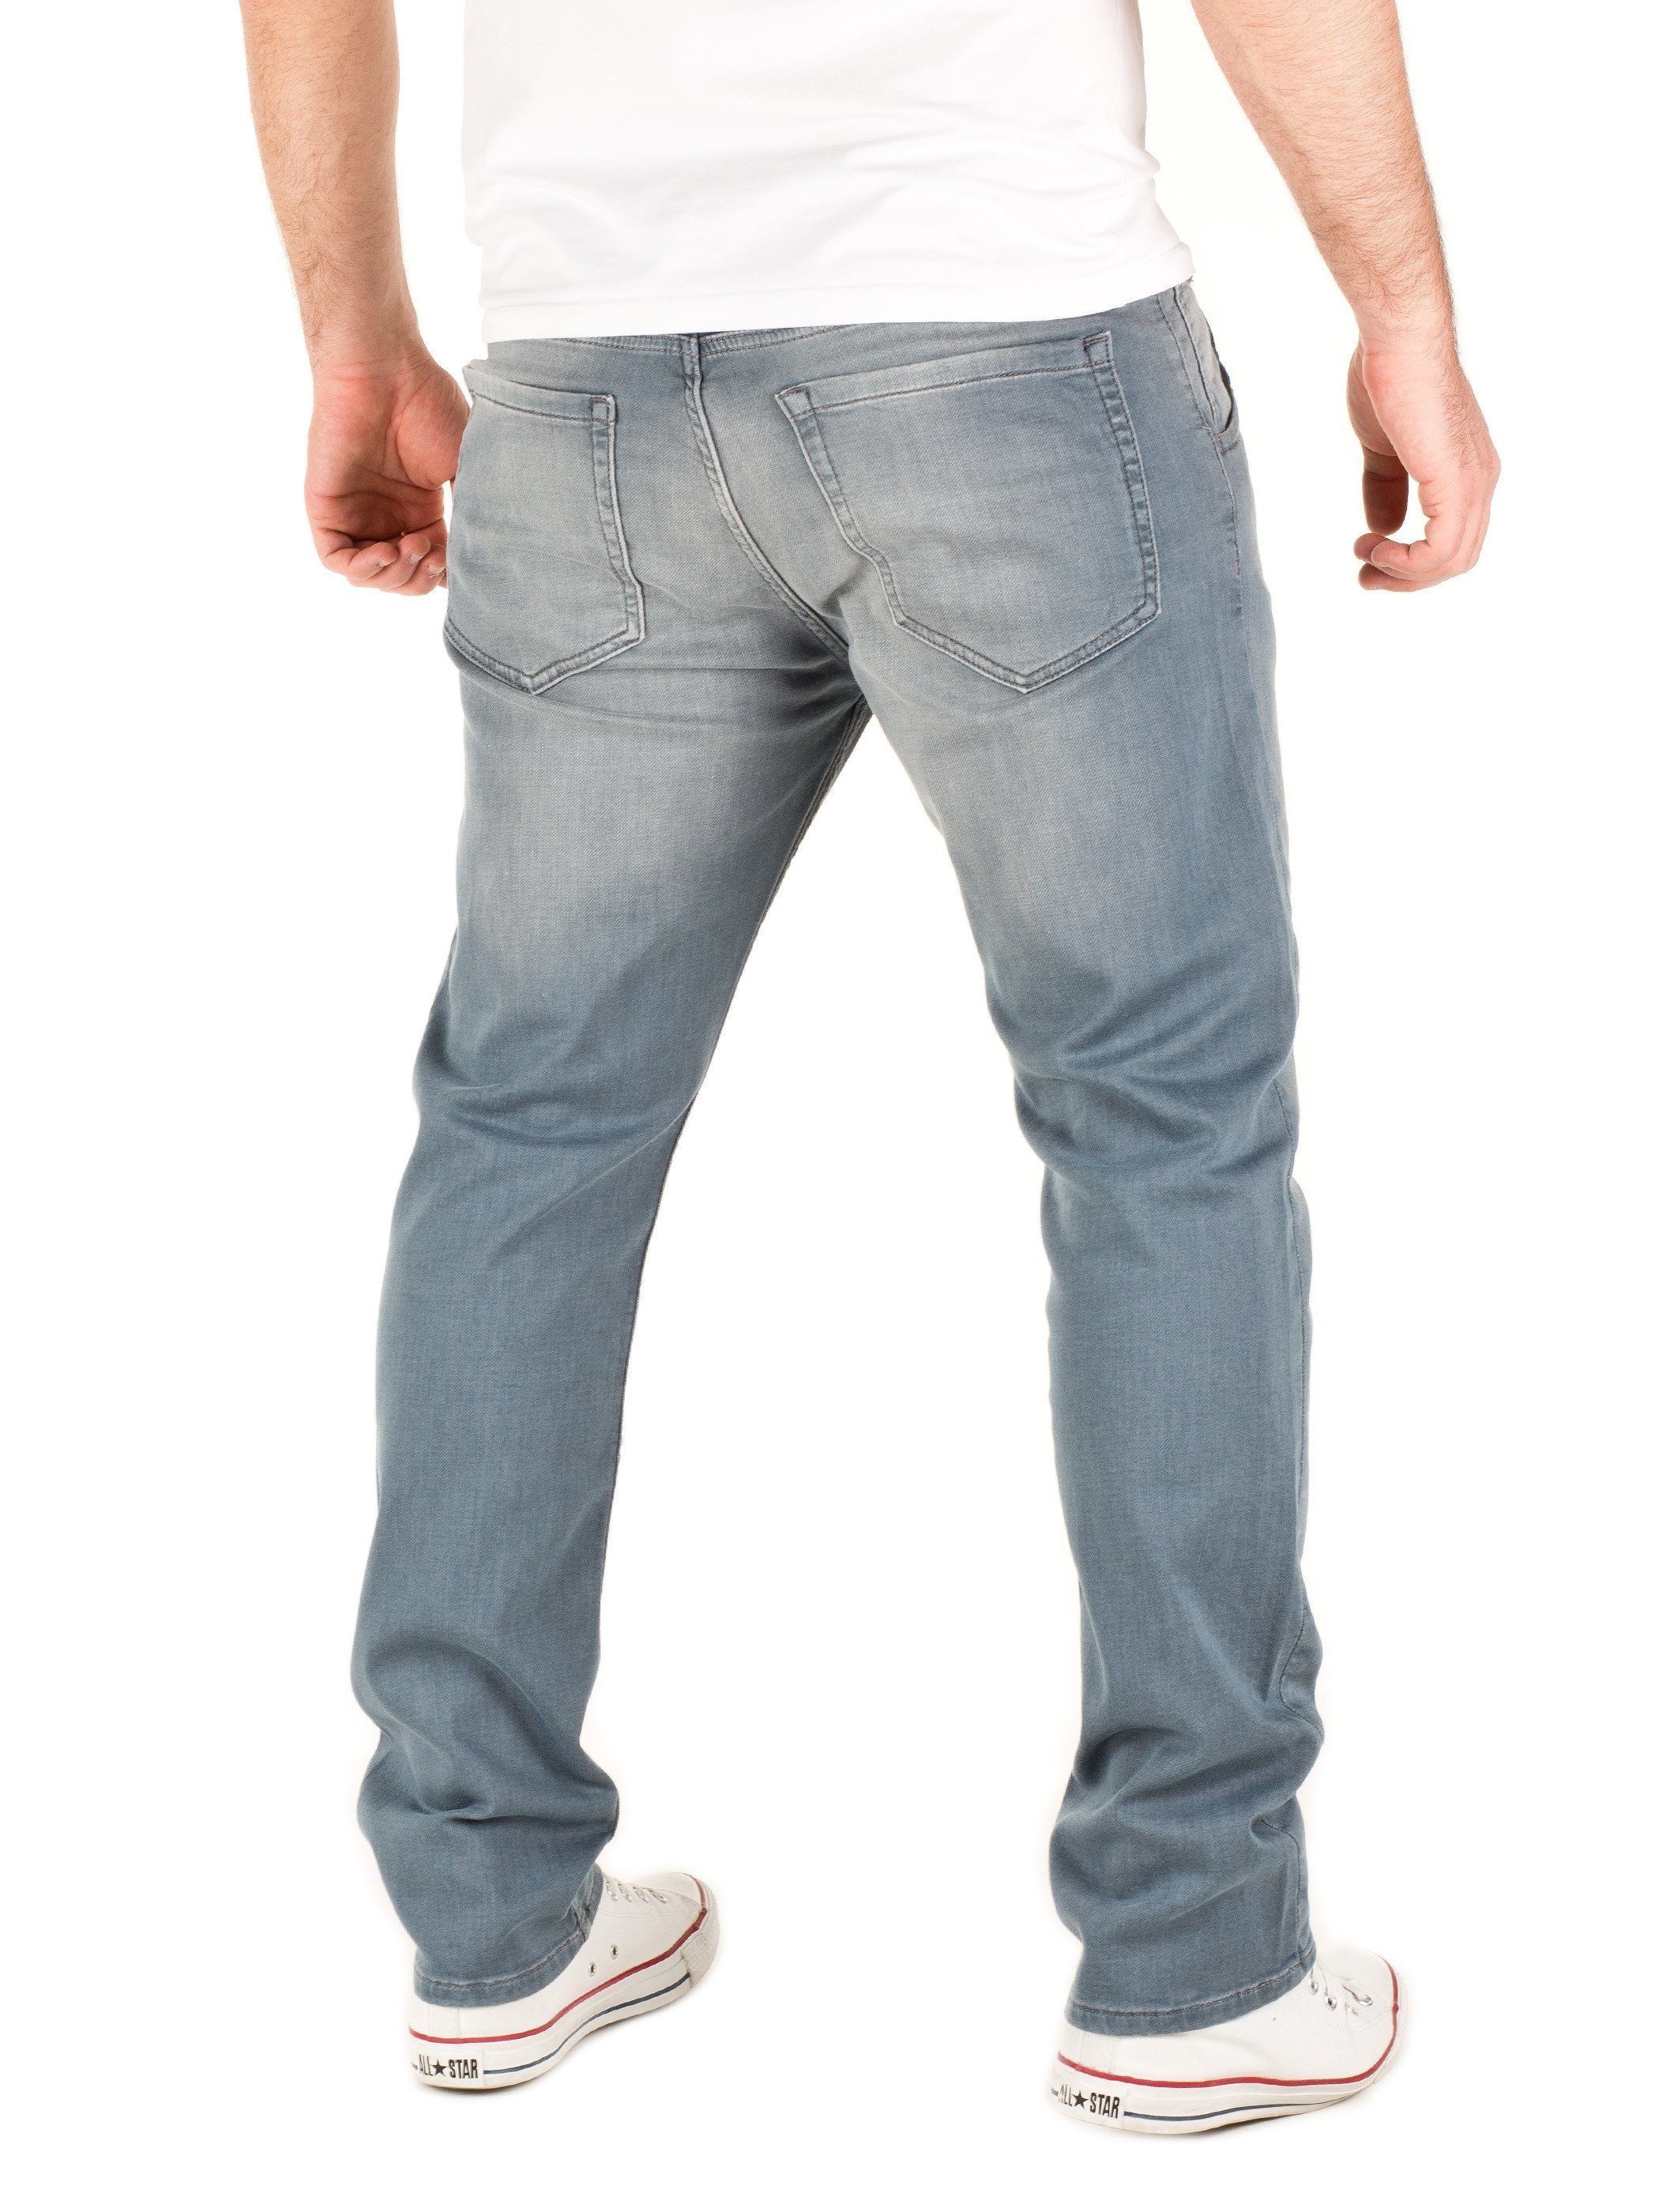 Hose in in Herren Slim-fit-Jeans WOTEGA Denim Jeans-Look Jogginghose Jogging Stretch Joshua grey 4215) Jeans Grau (turbulence Sweathosen